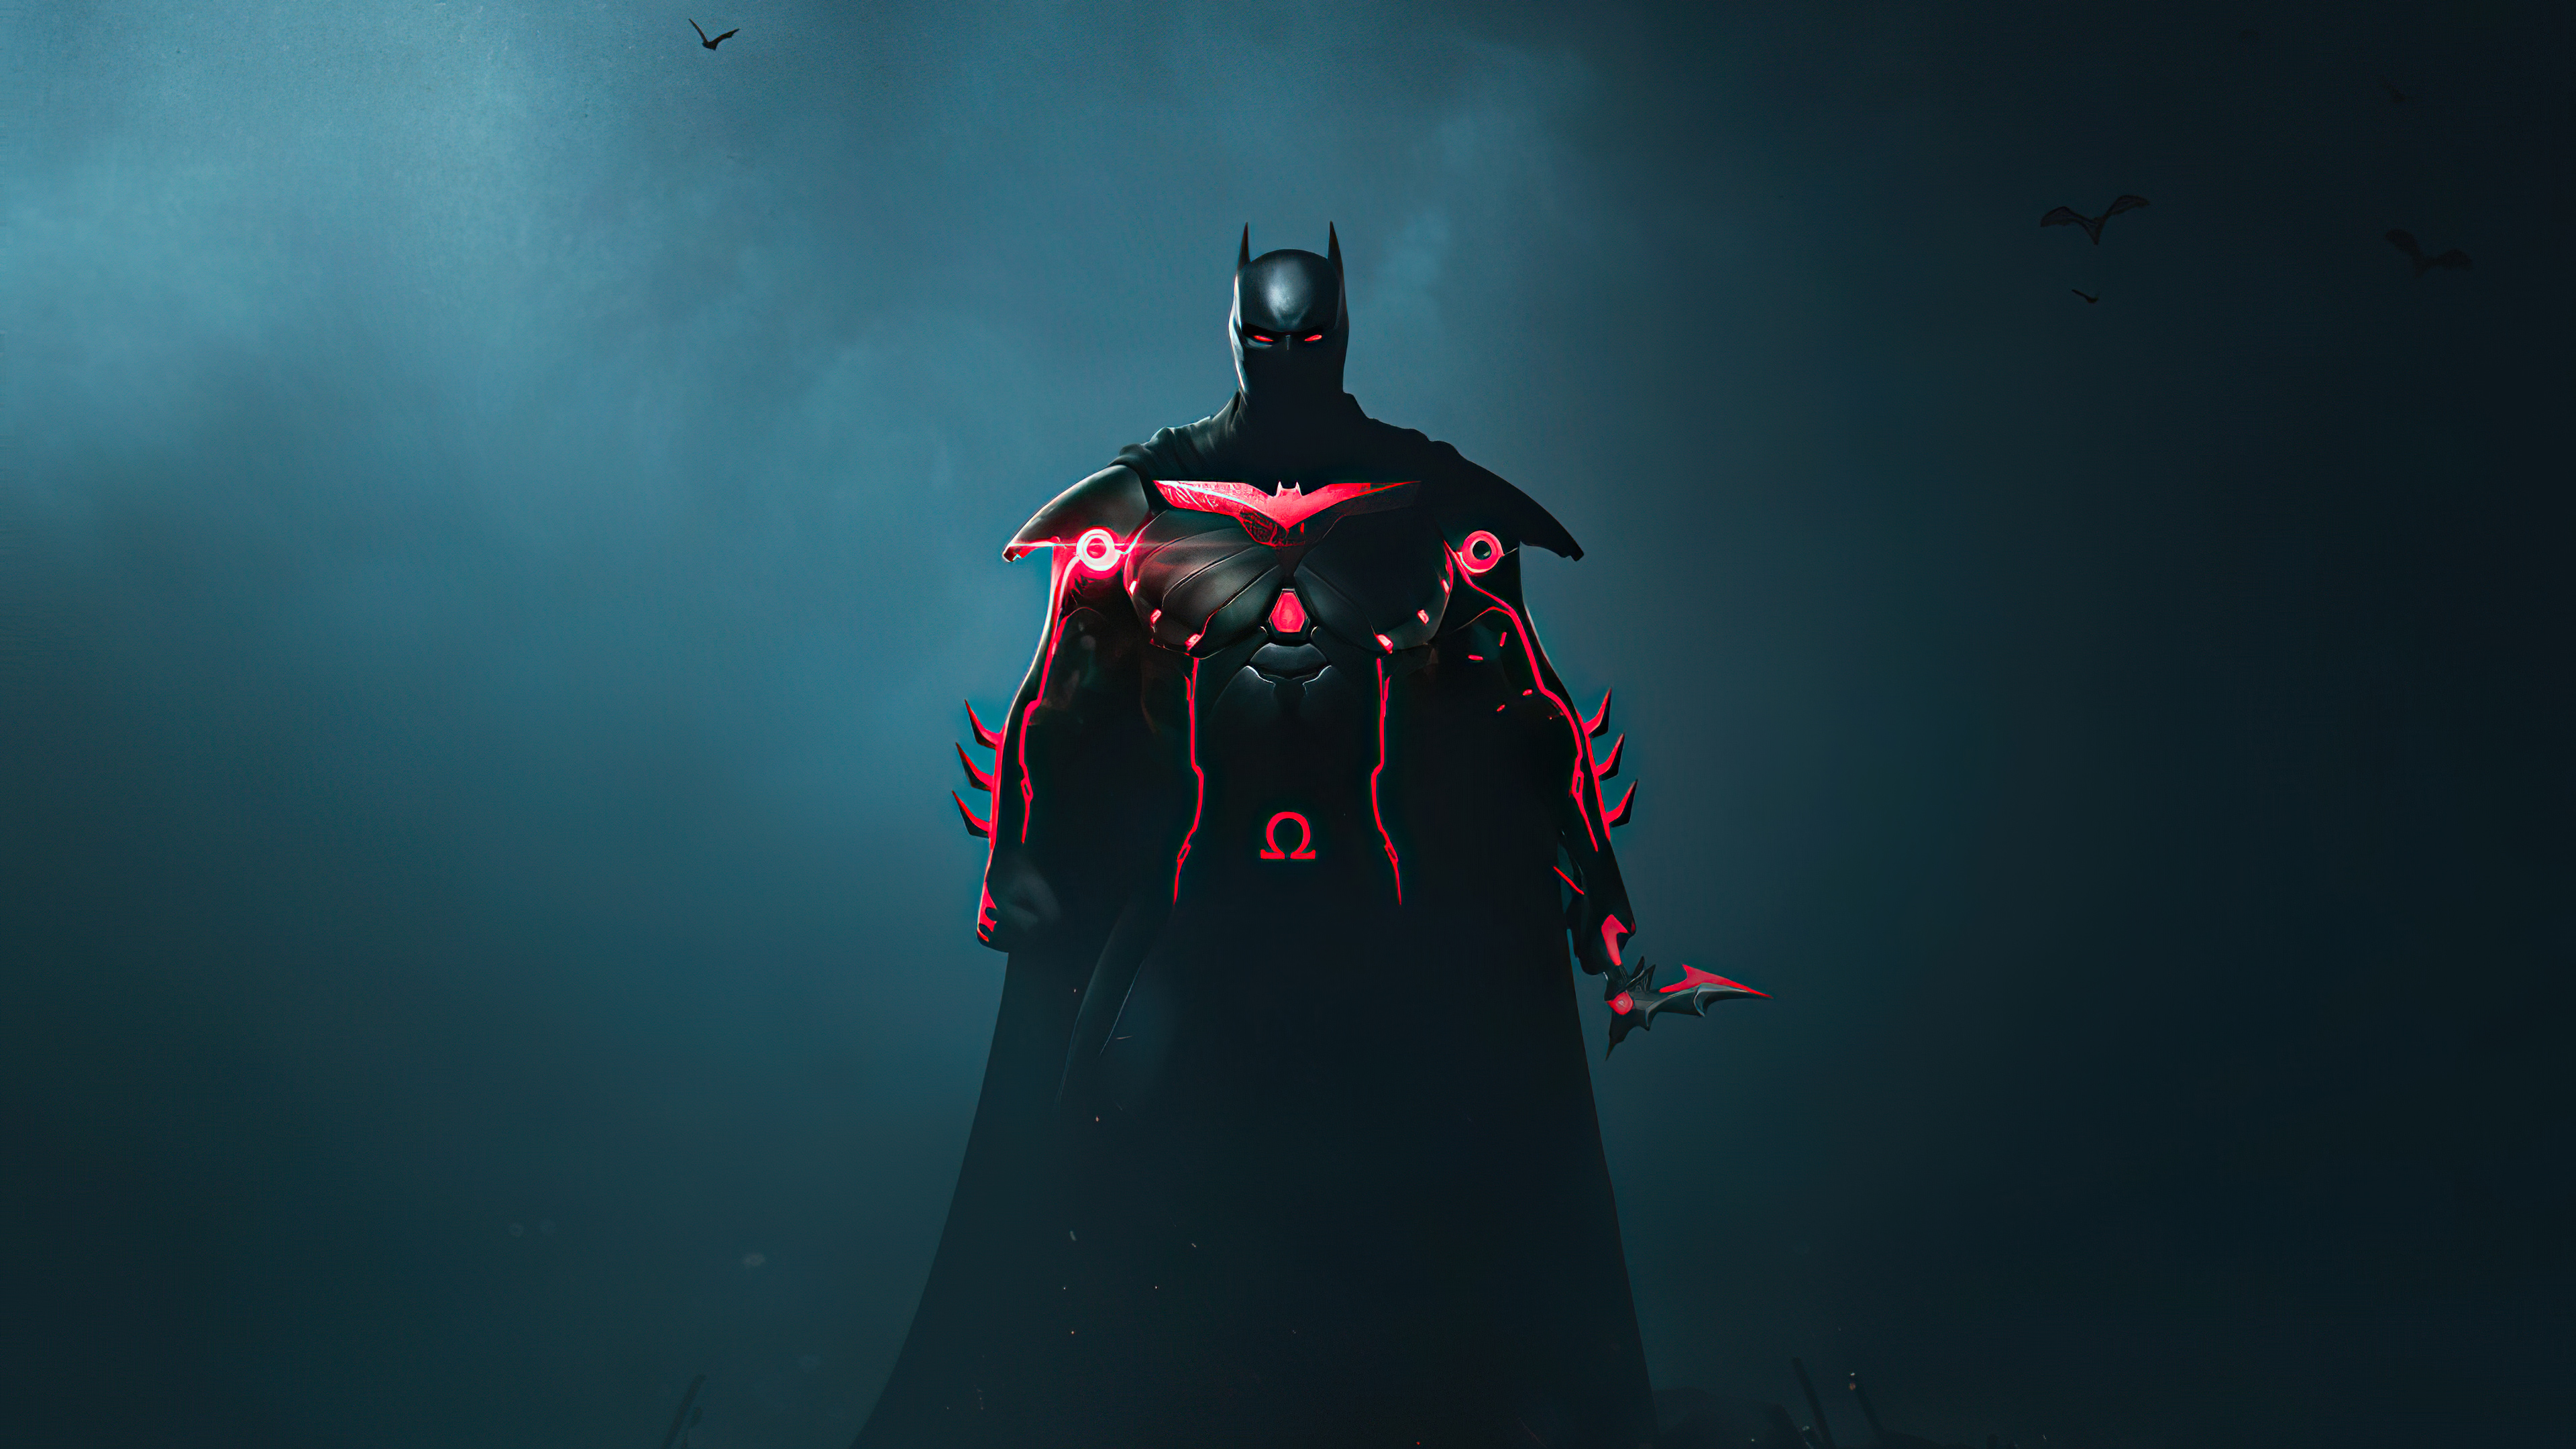 Batman Dc Universe Comic Wallpaper Hd Superheroes 4k Wallpapers Images Photos And Background Wallpapers Den